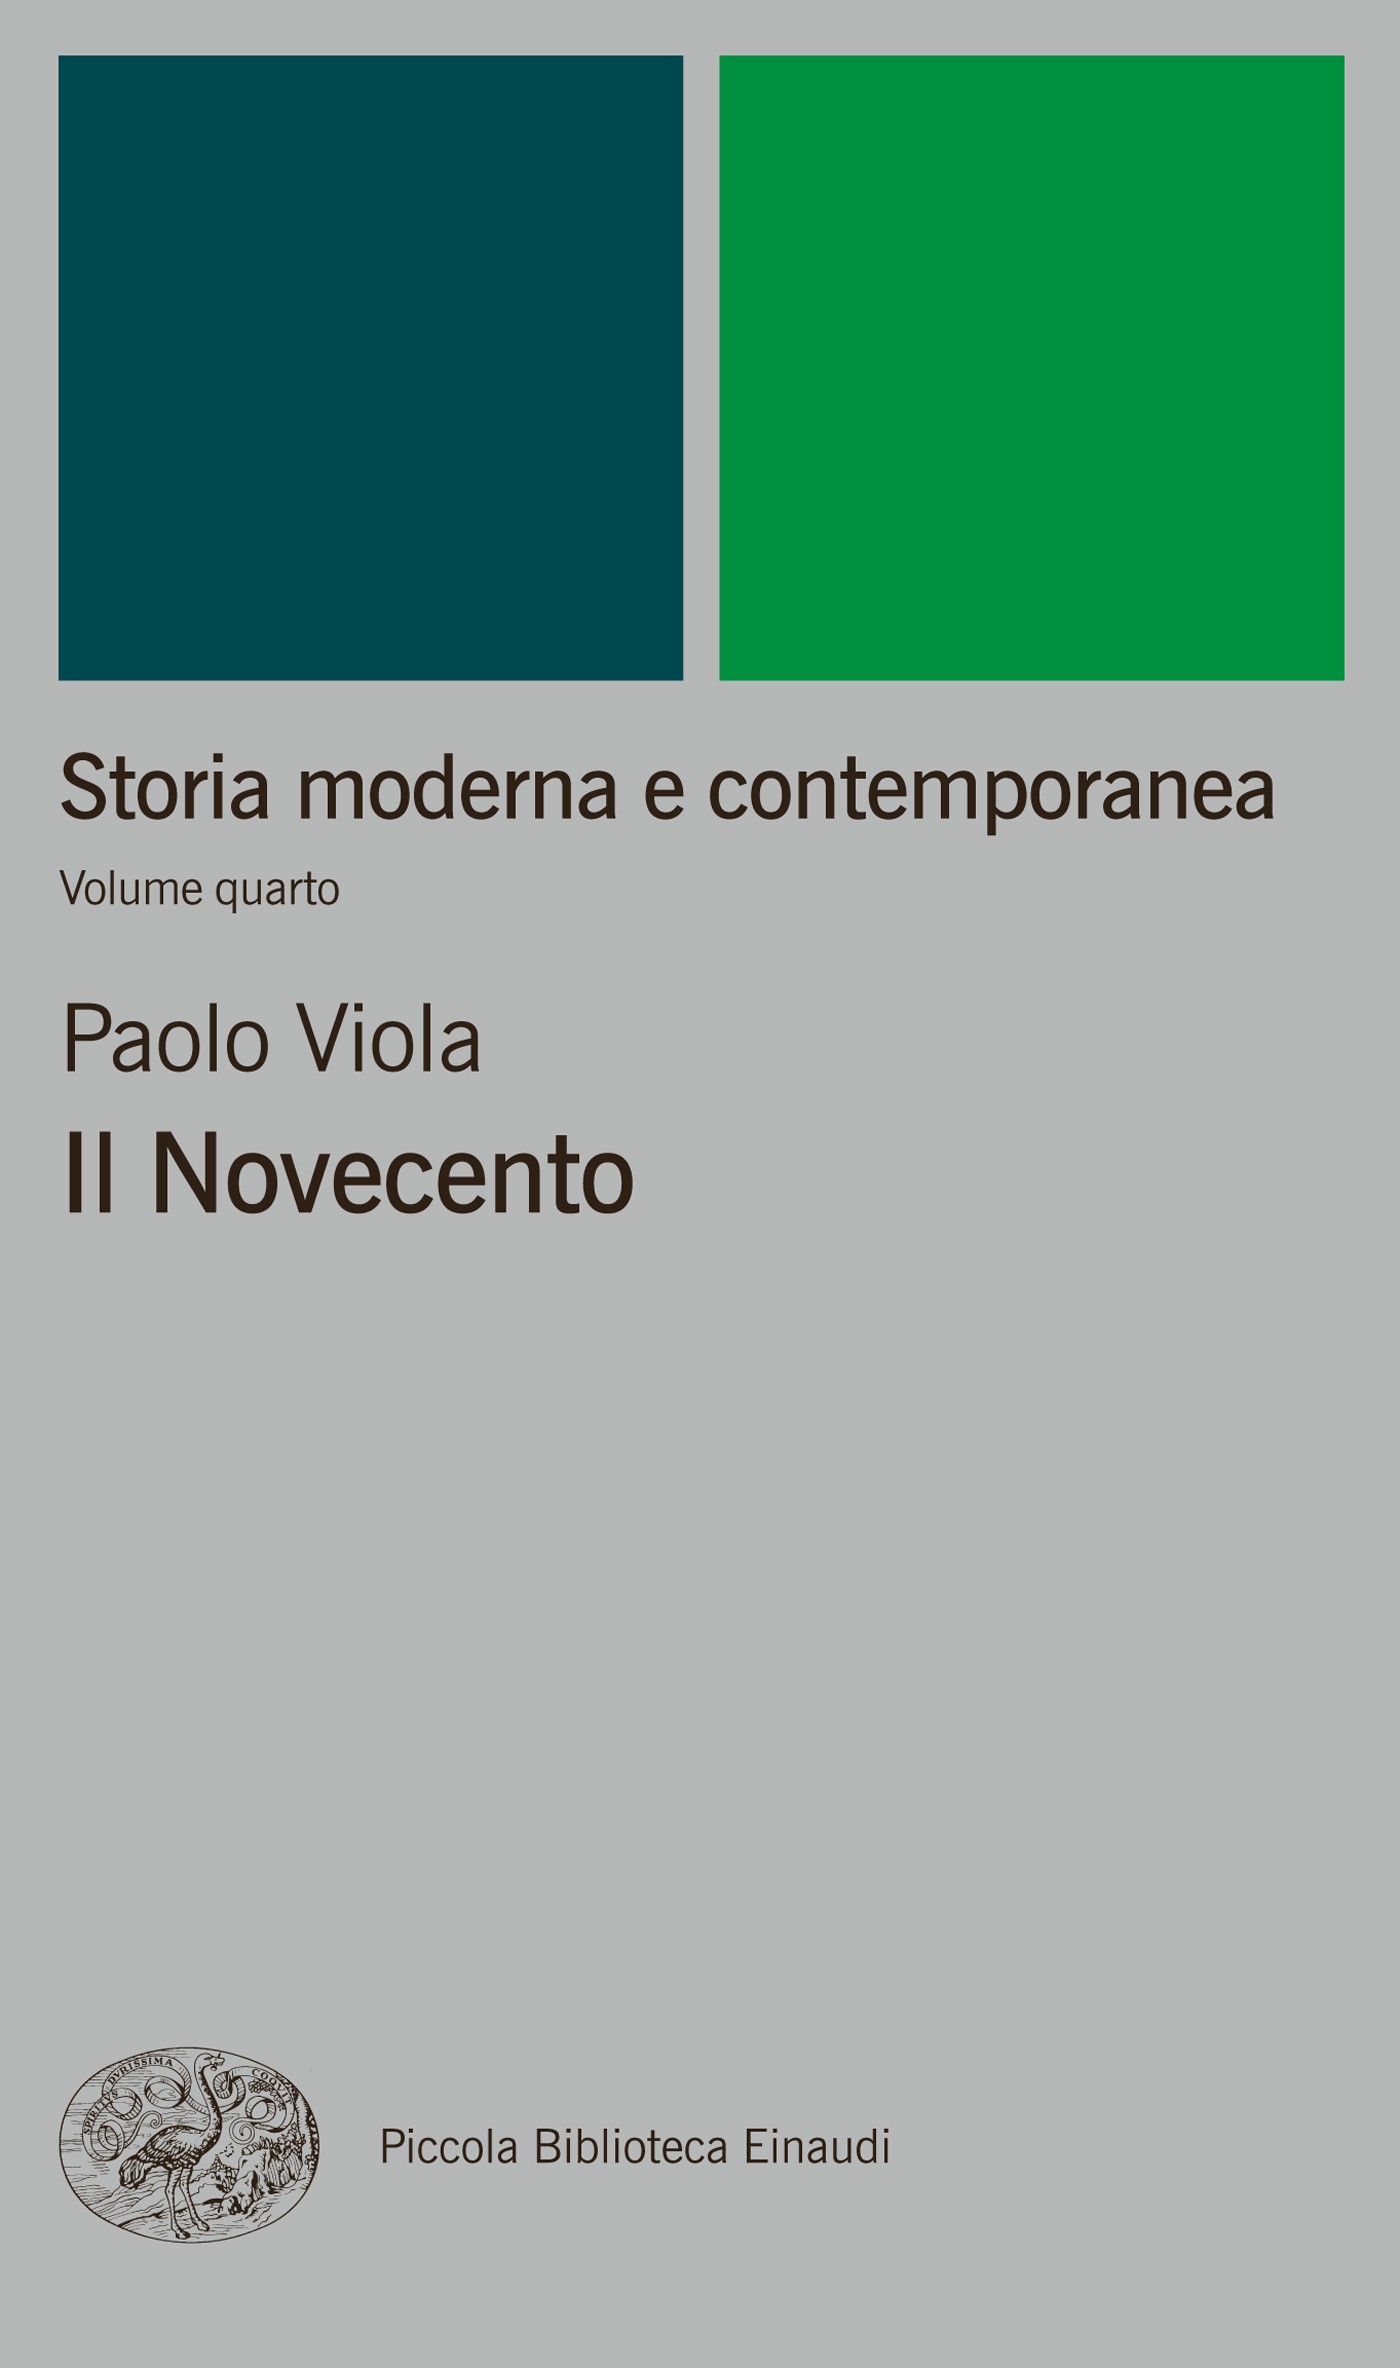 Storia moderna e contemporanea. IV. Il Novecento - Librerie.coop